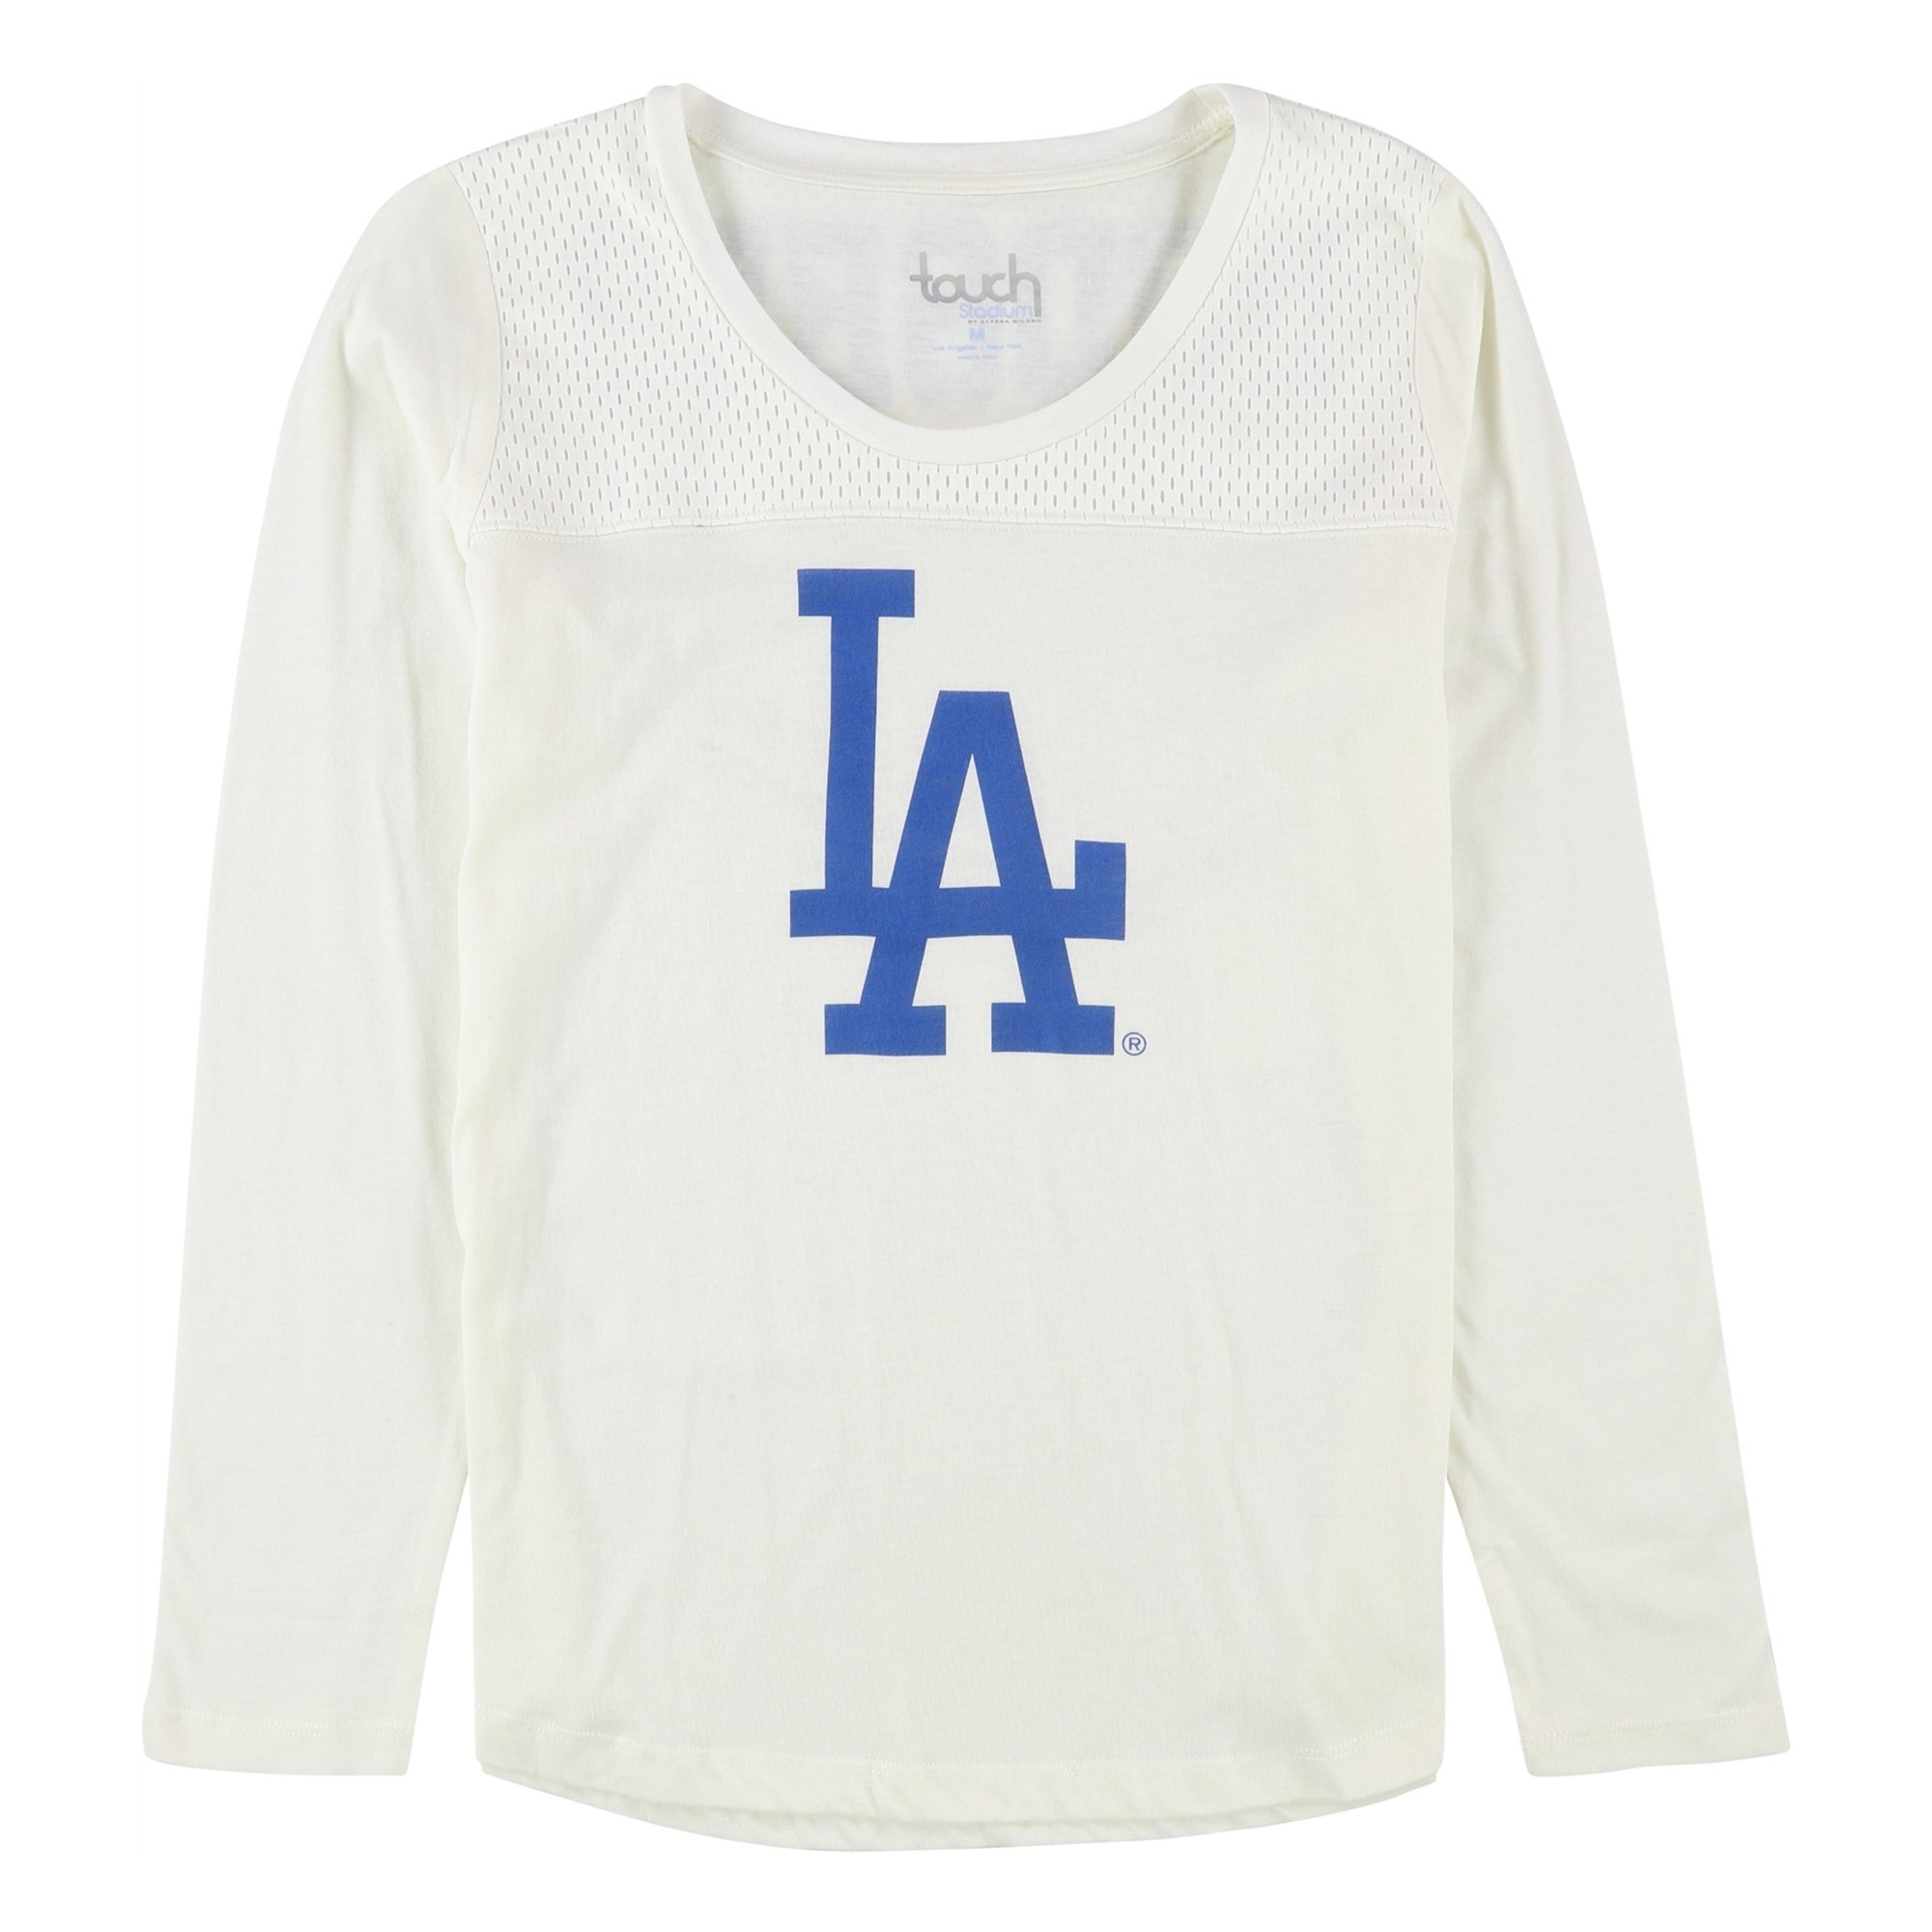 Buy a Womens Touch LA Dodgers Logo Graphic T-Shirt Online